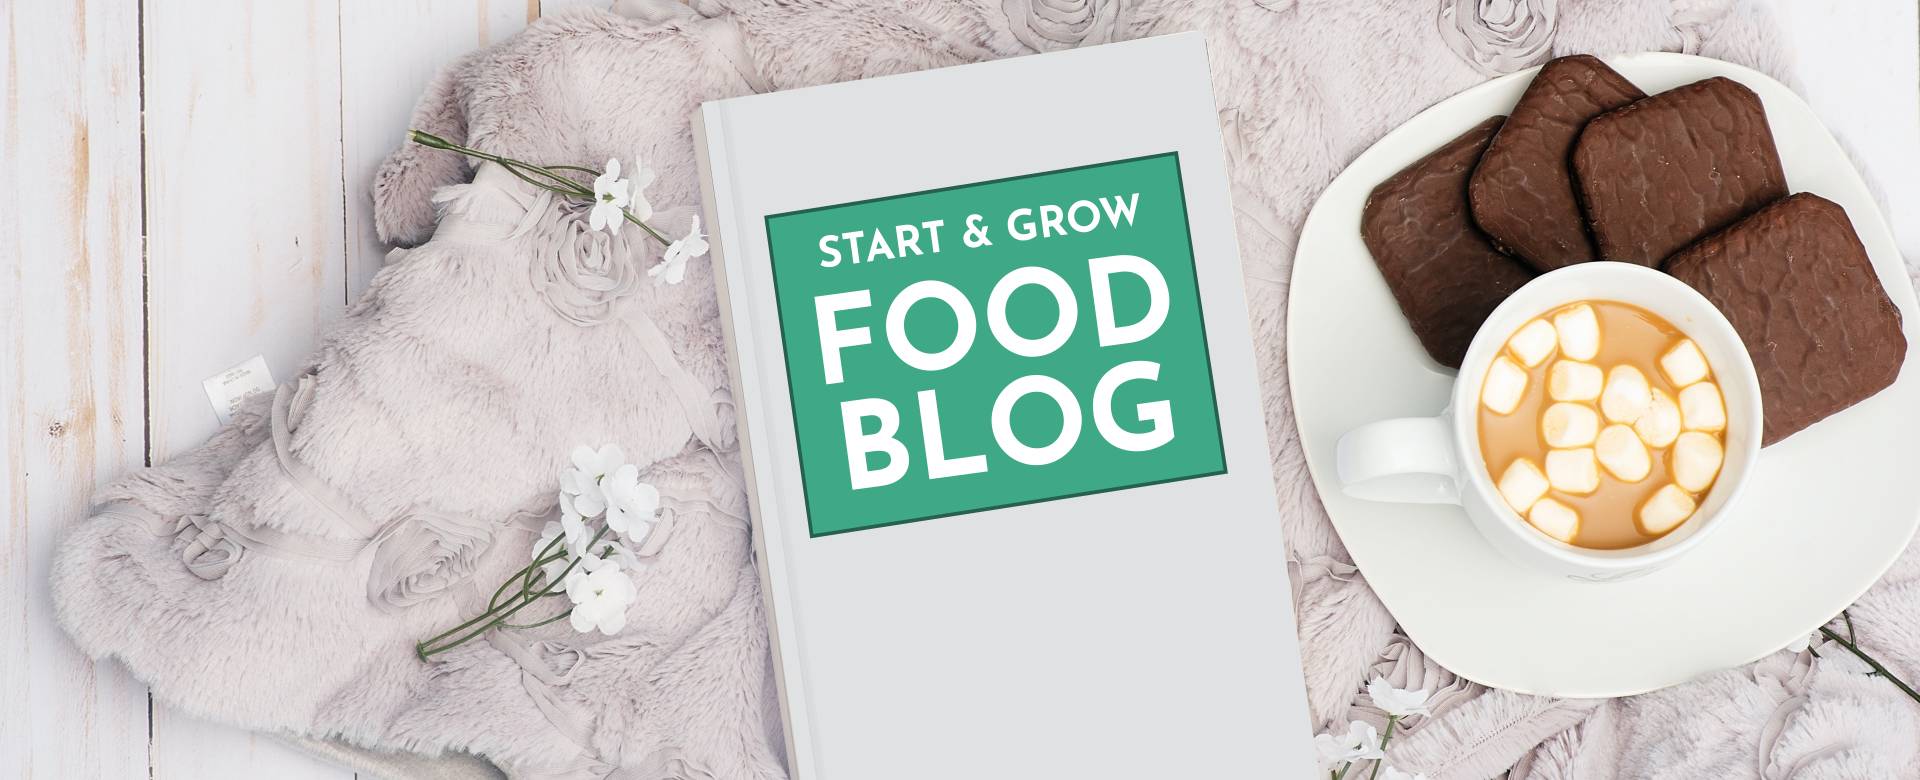 Start & Grow Your Food Blog